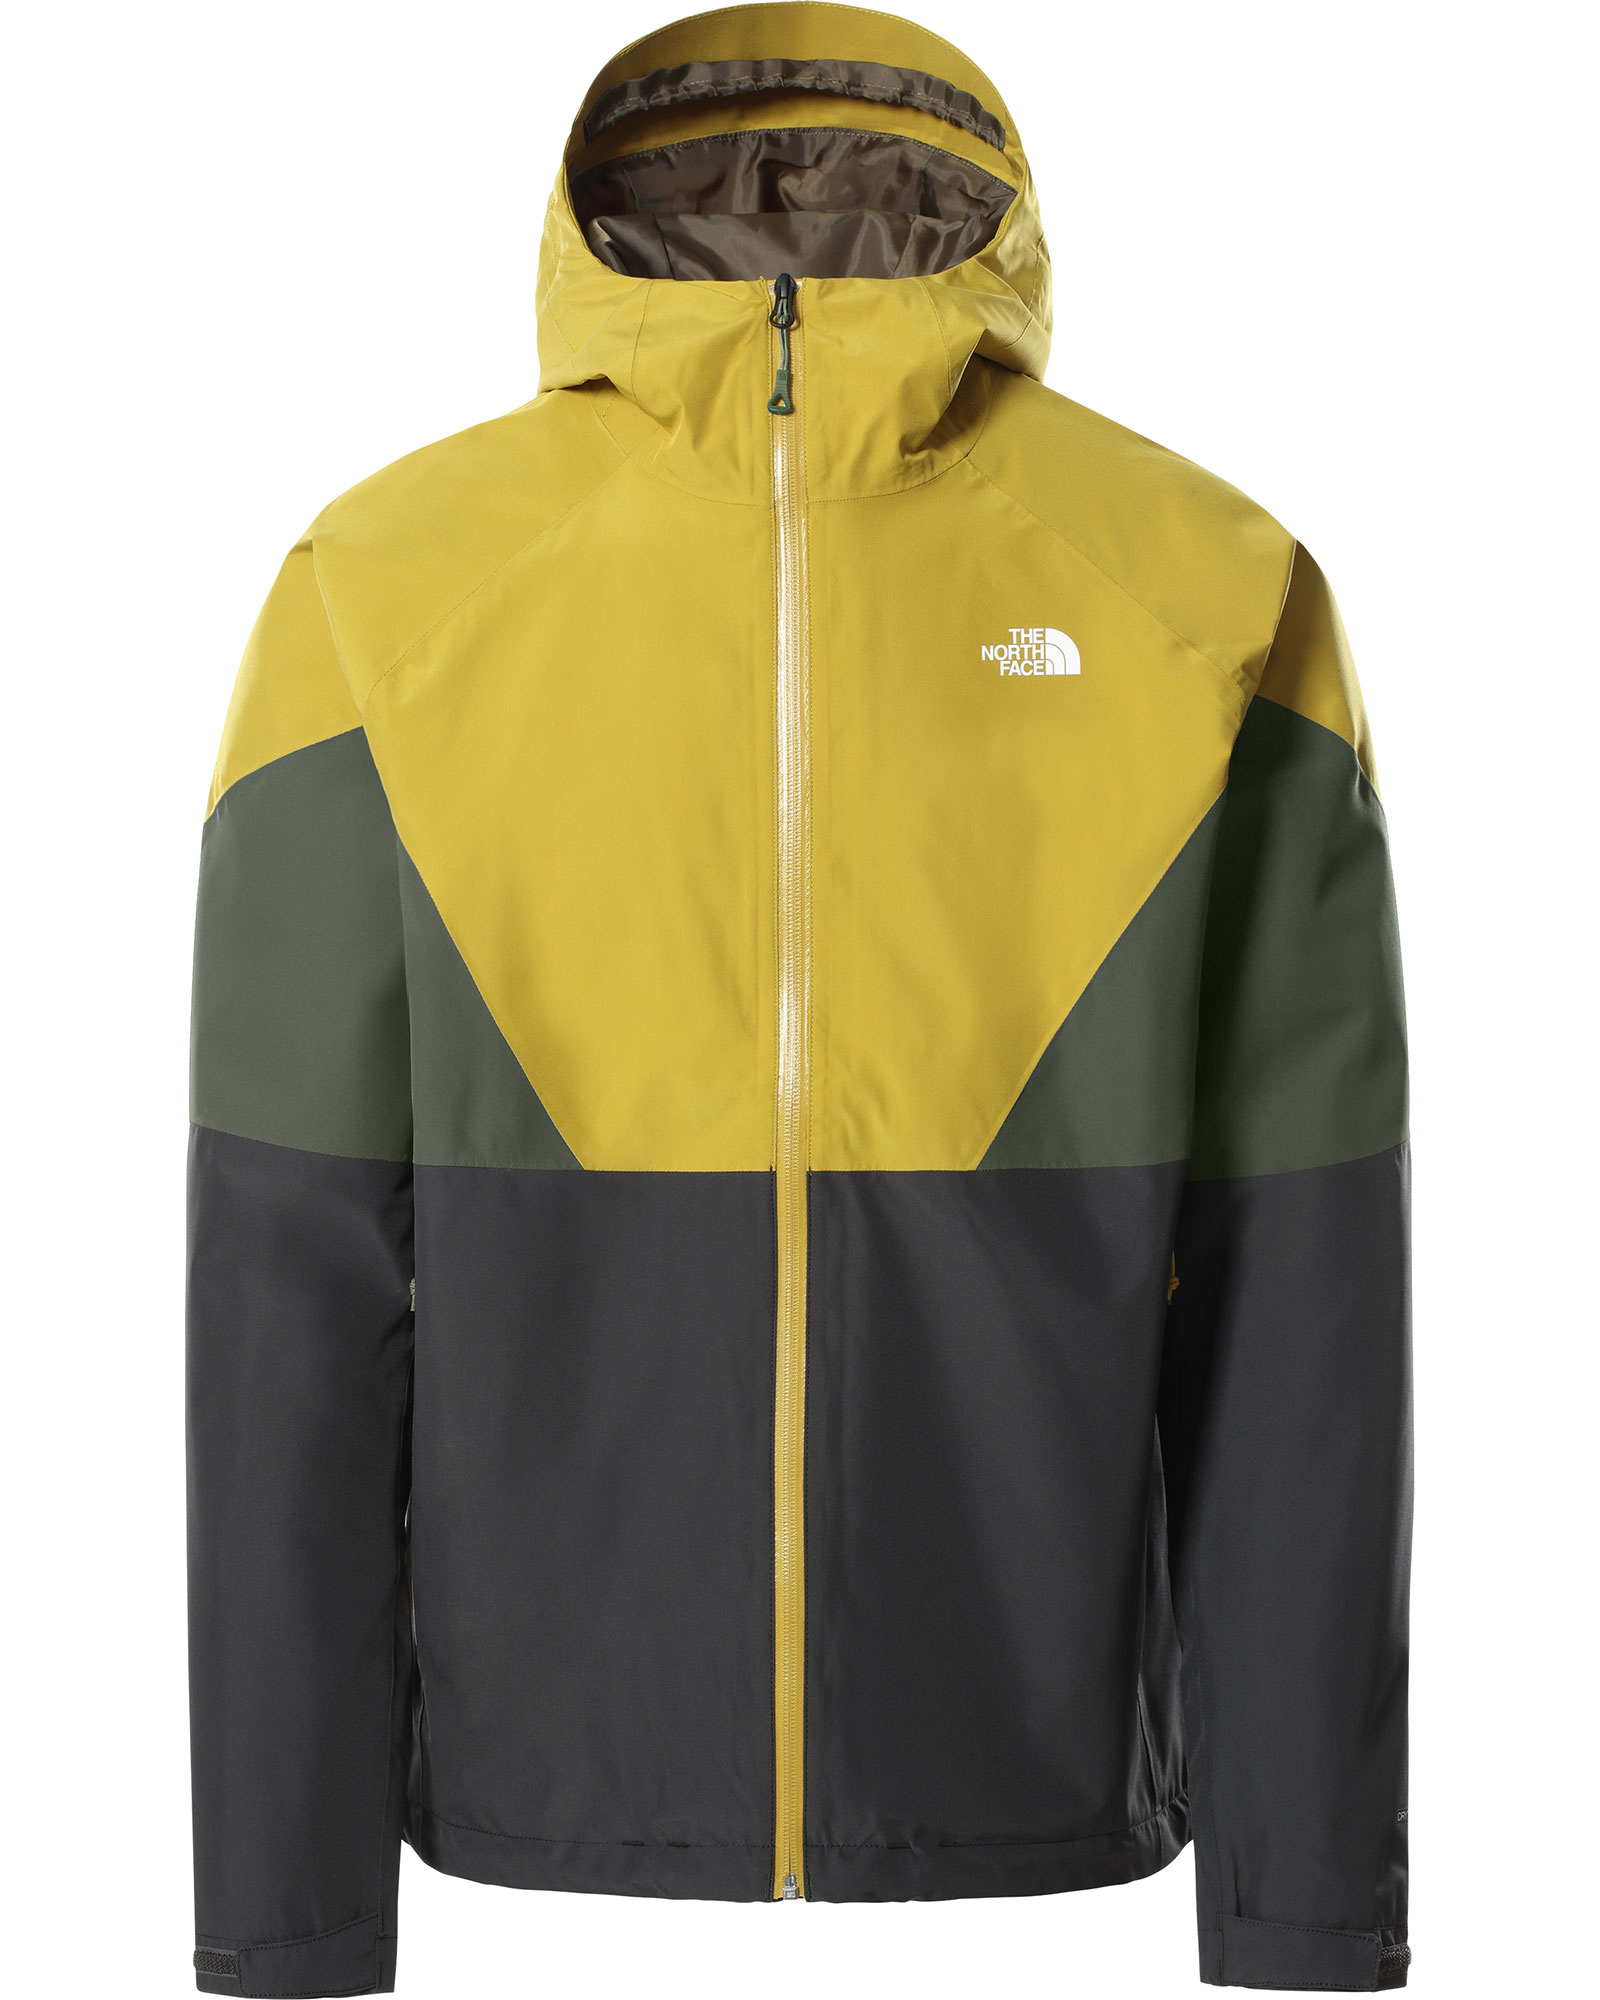 The North Face Lightning Men’s Jacket - Asphalt Grey/Arrowood Yellow L